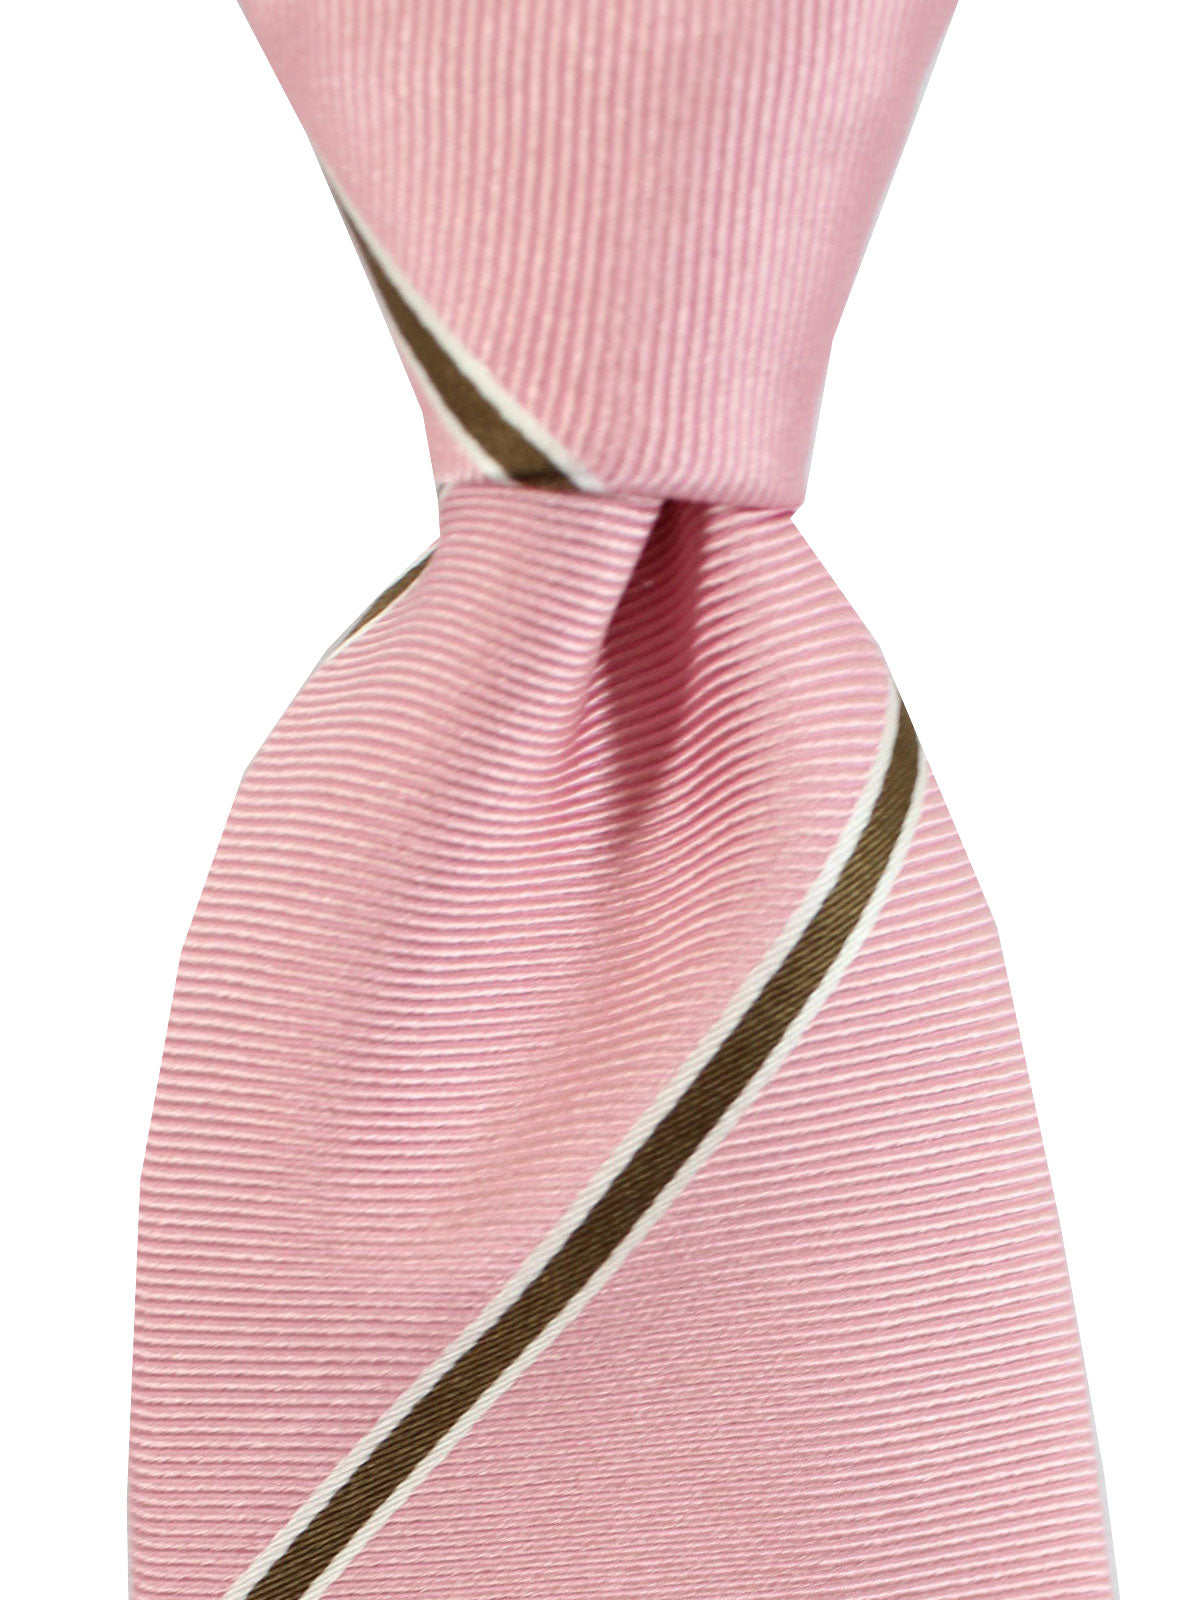 Cesare Attolini Silk Tie Pink Brown Stripes